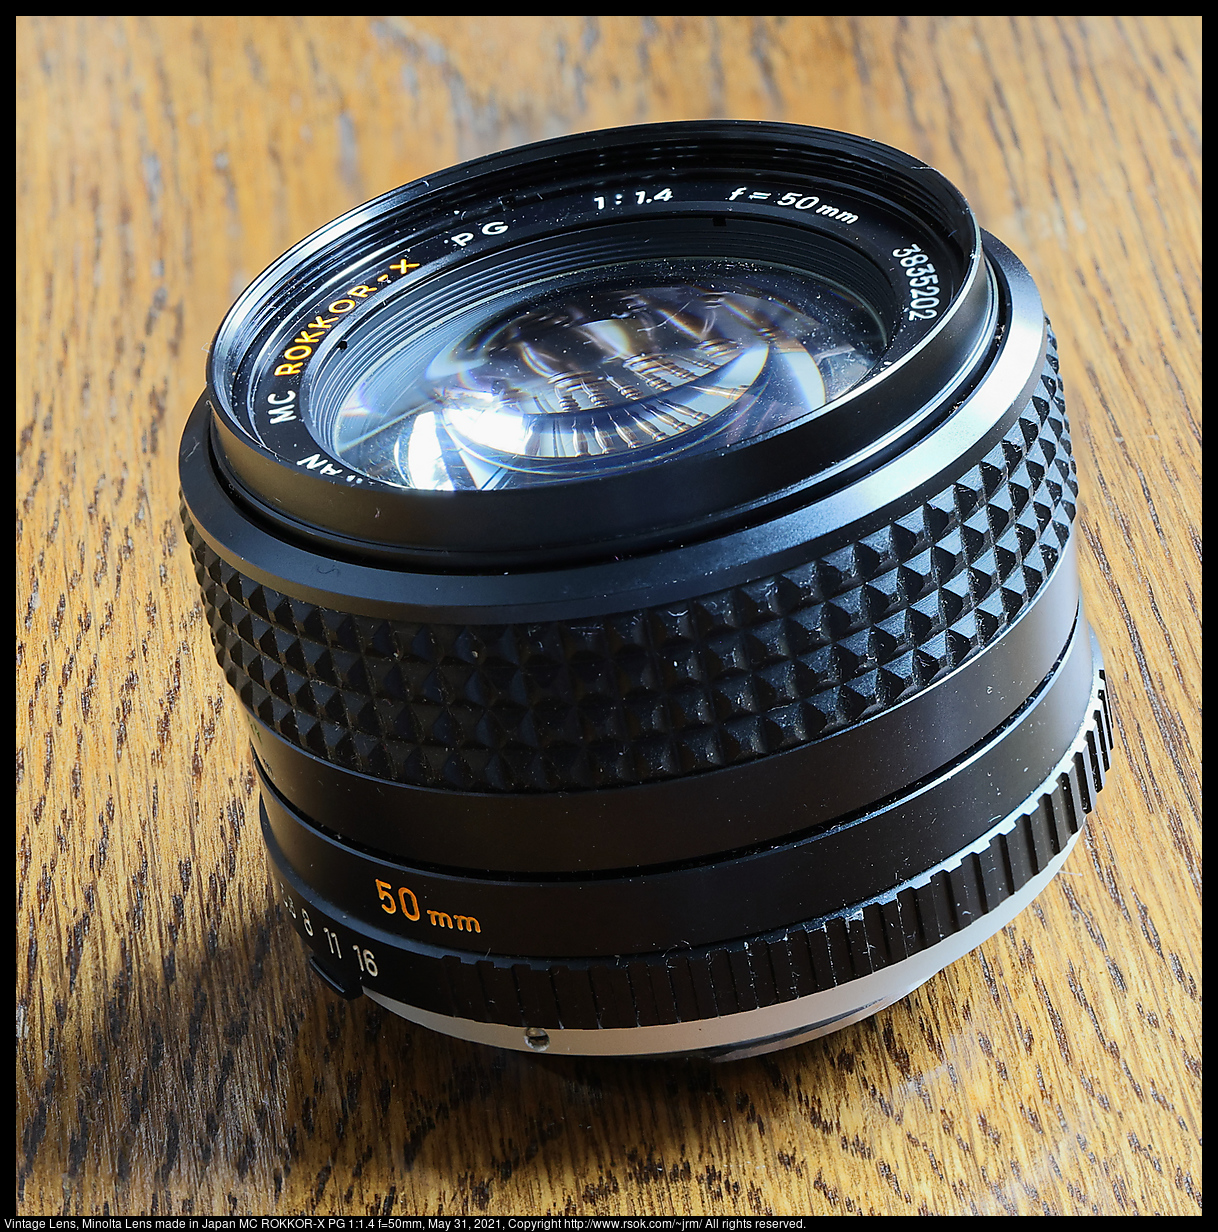 Vintage Lens, Minolta Lens made in Japan MC ROKKOR-X PG 1:1.4 f=50mm, May 31, 2021